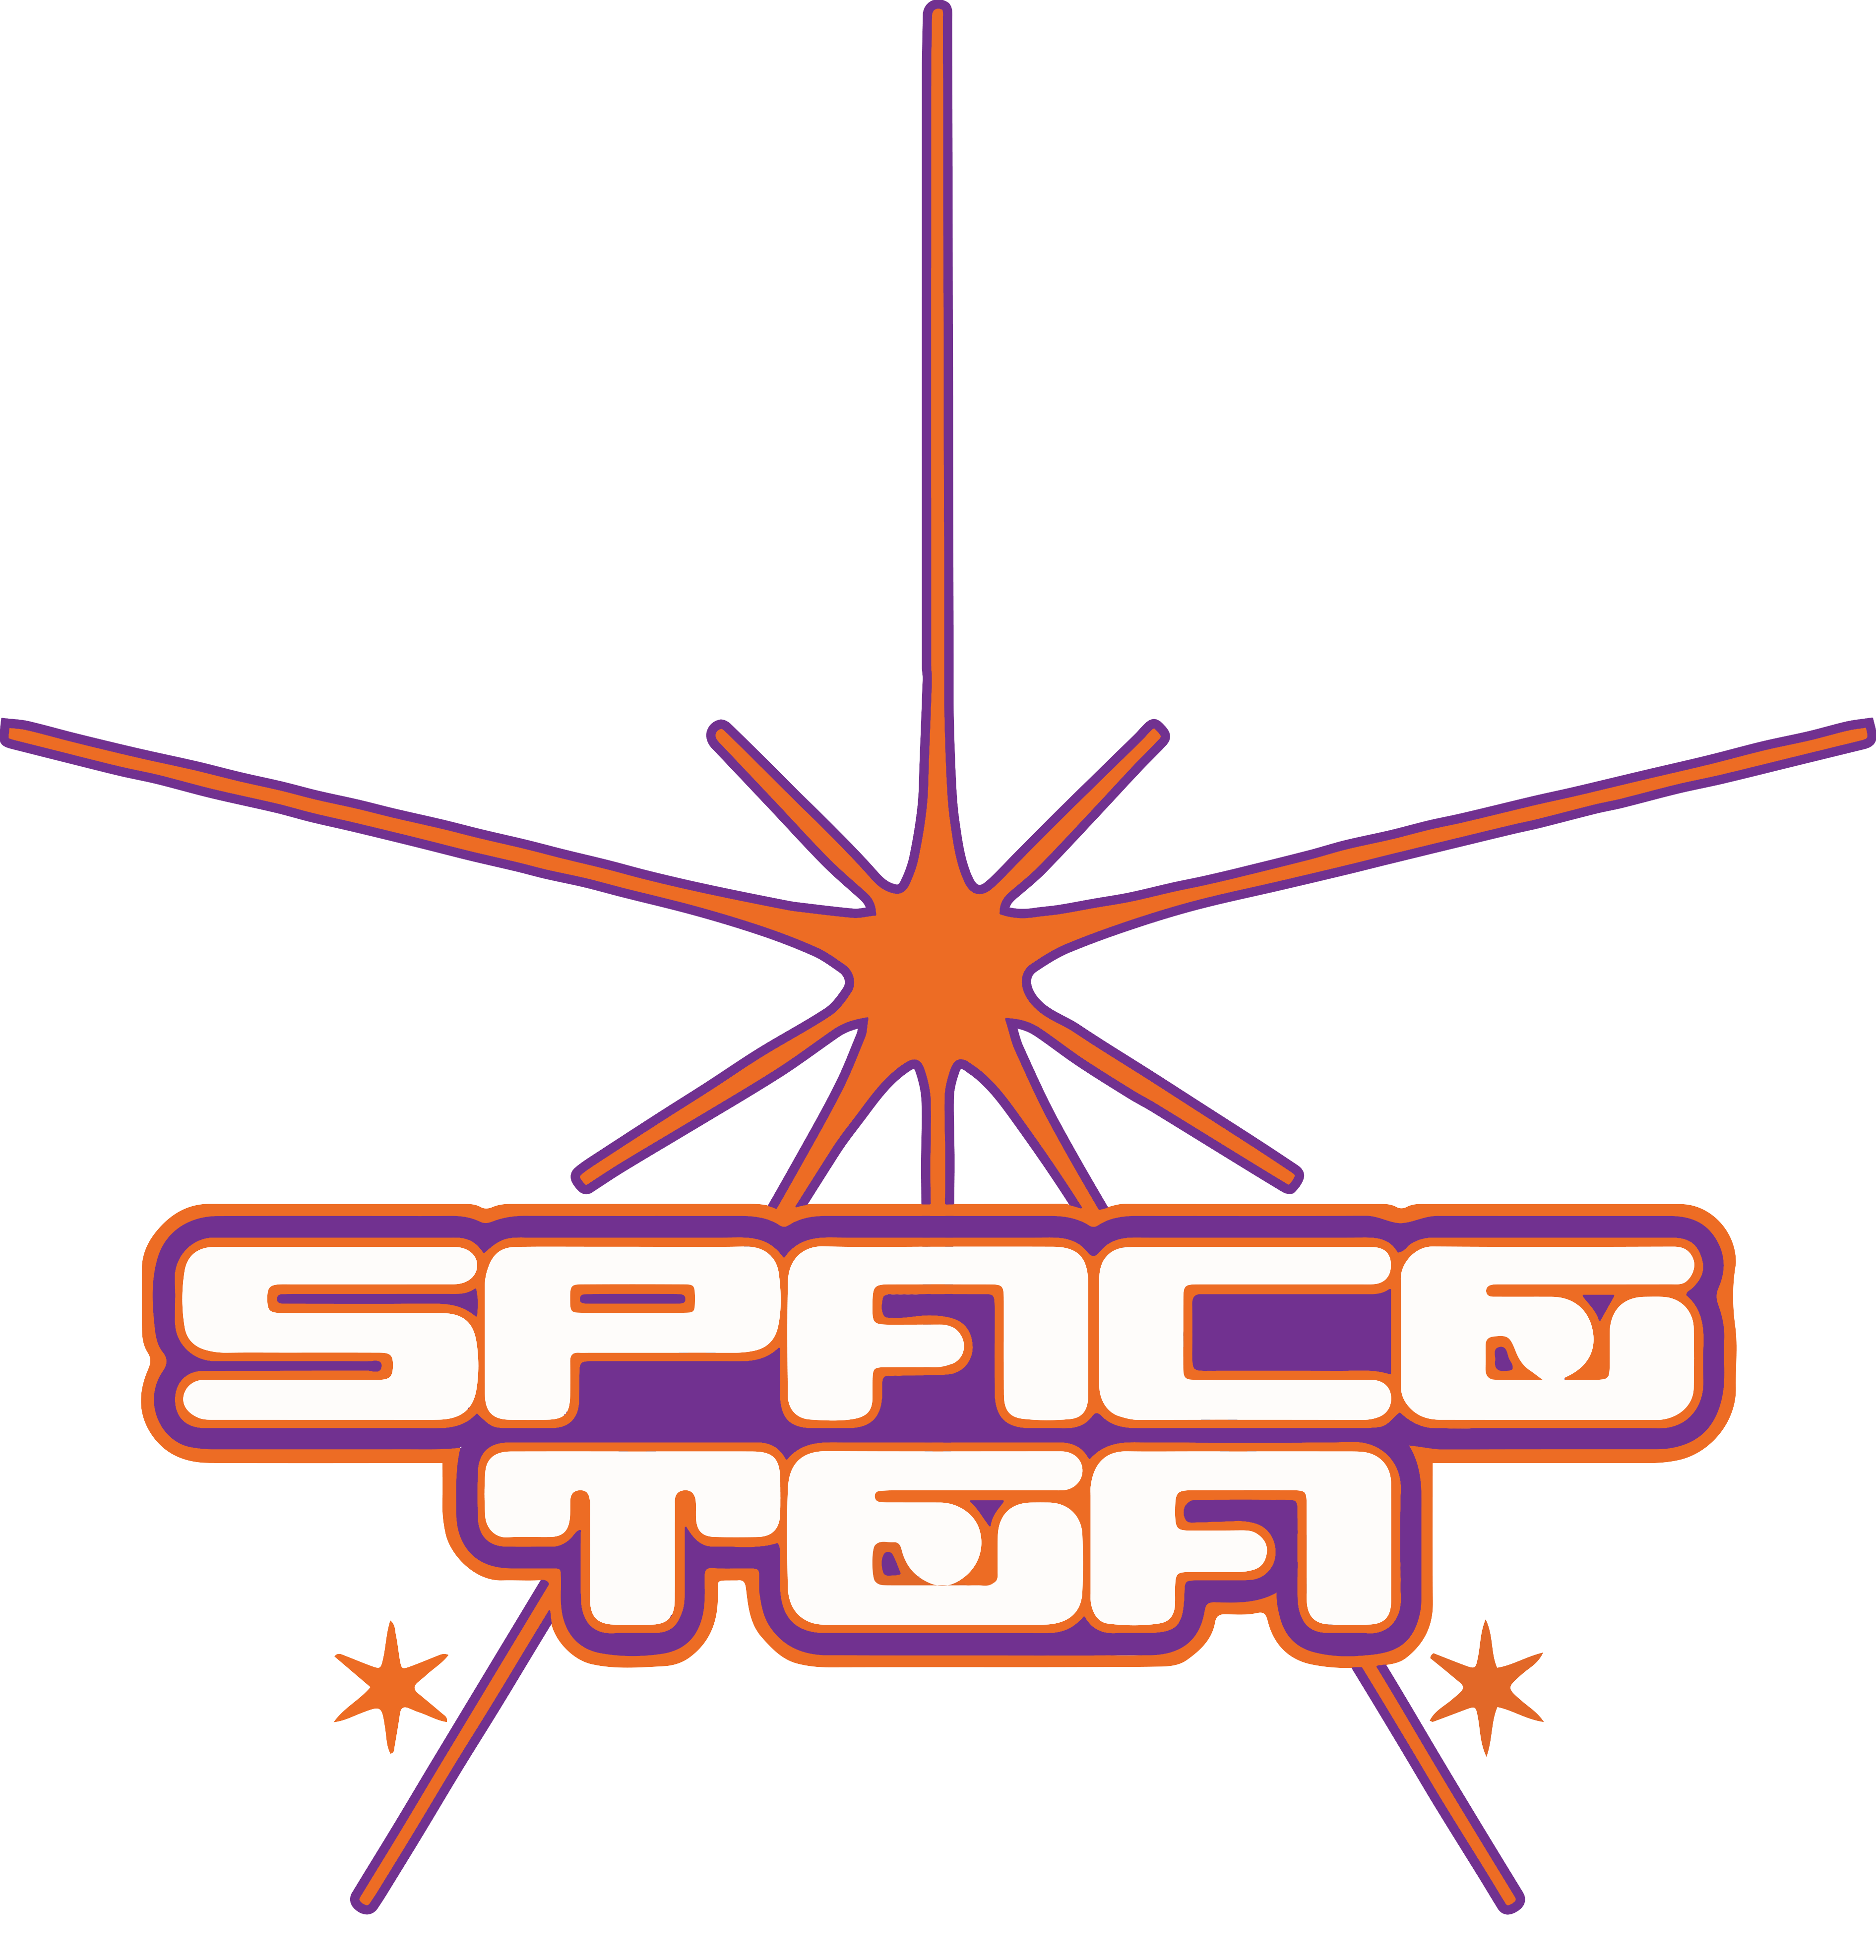 Main Space Tea star logo header.